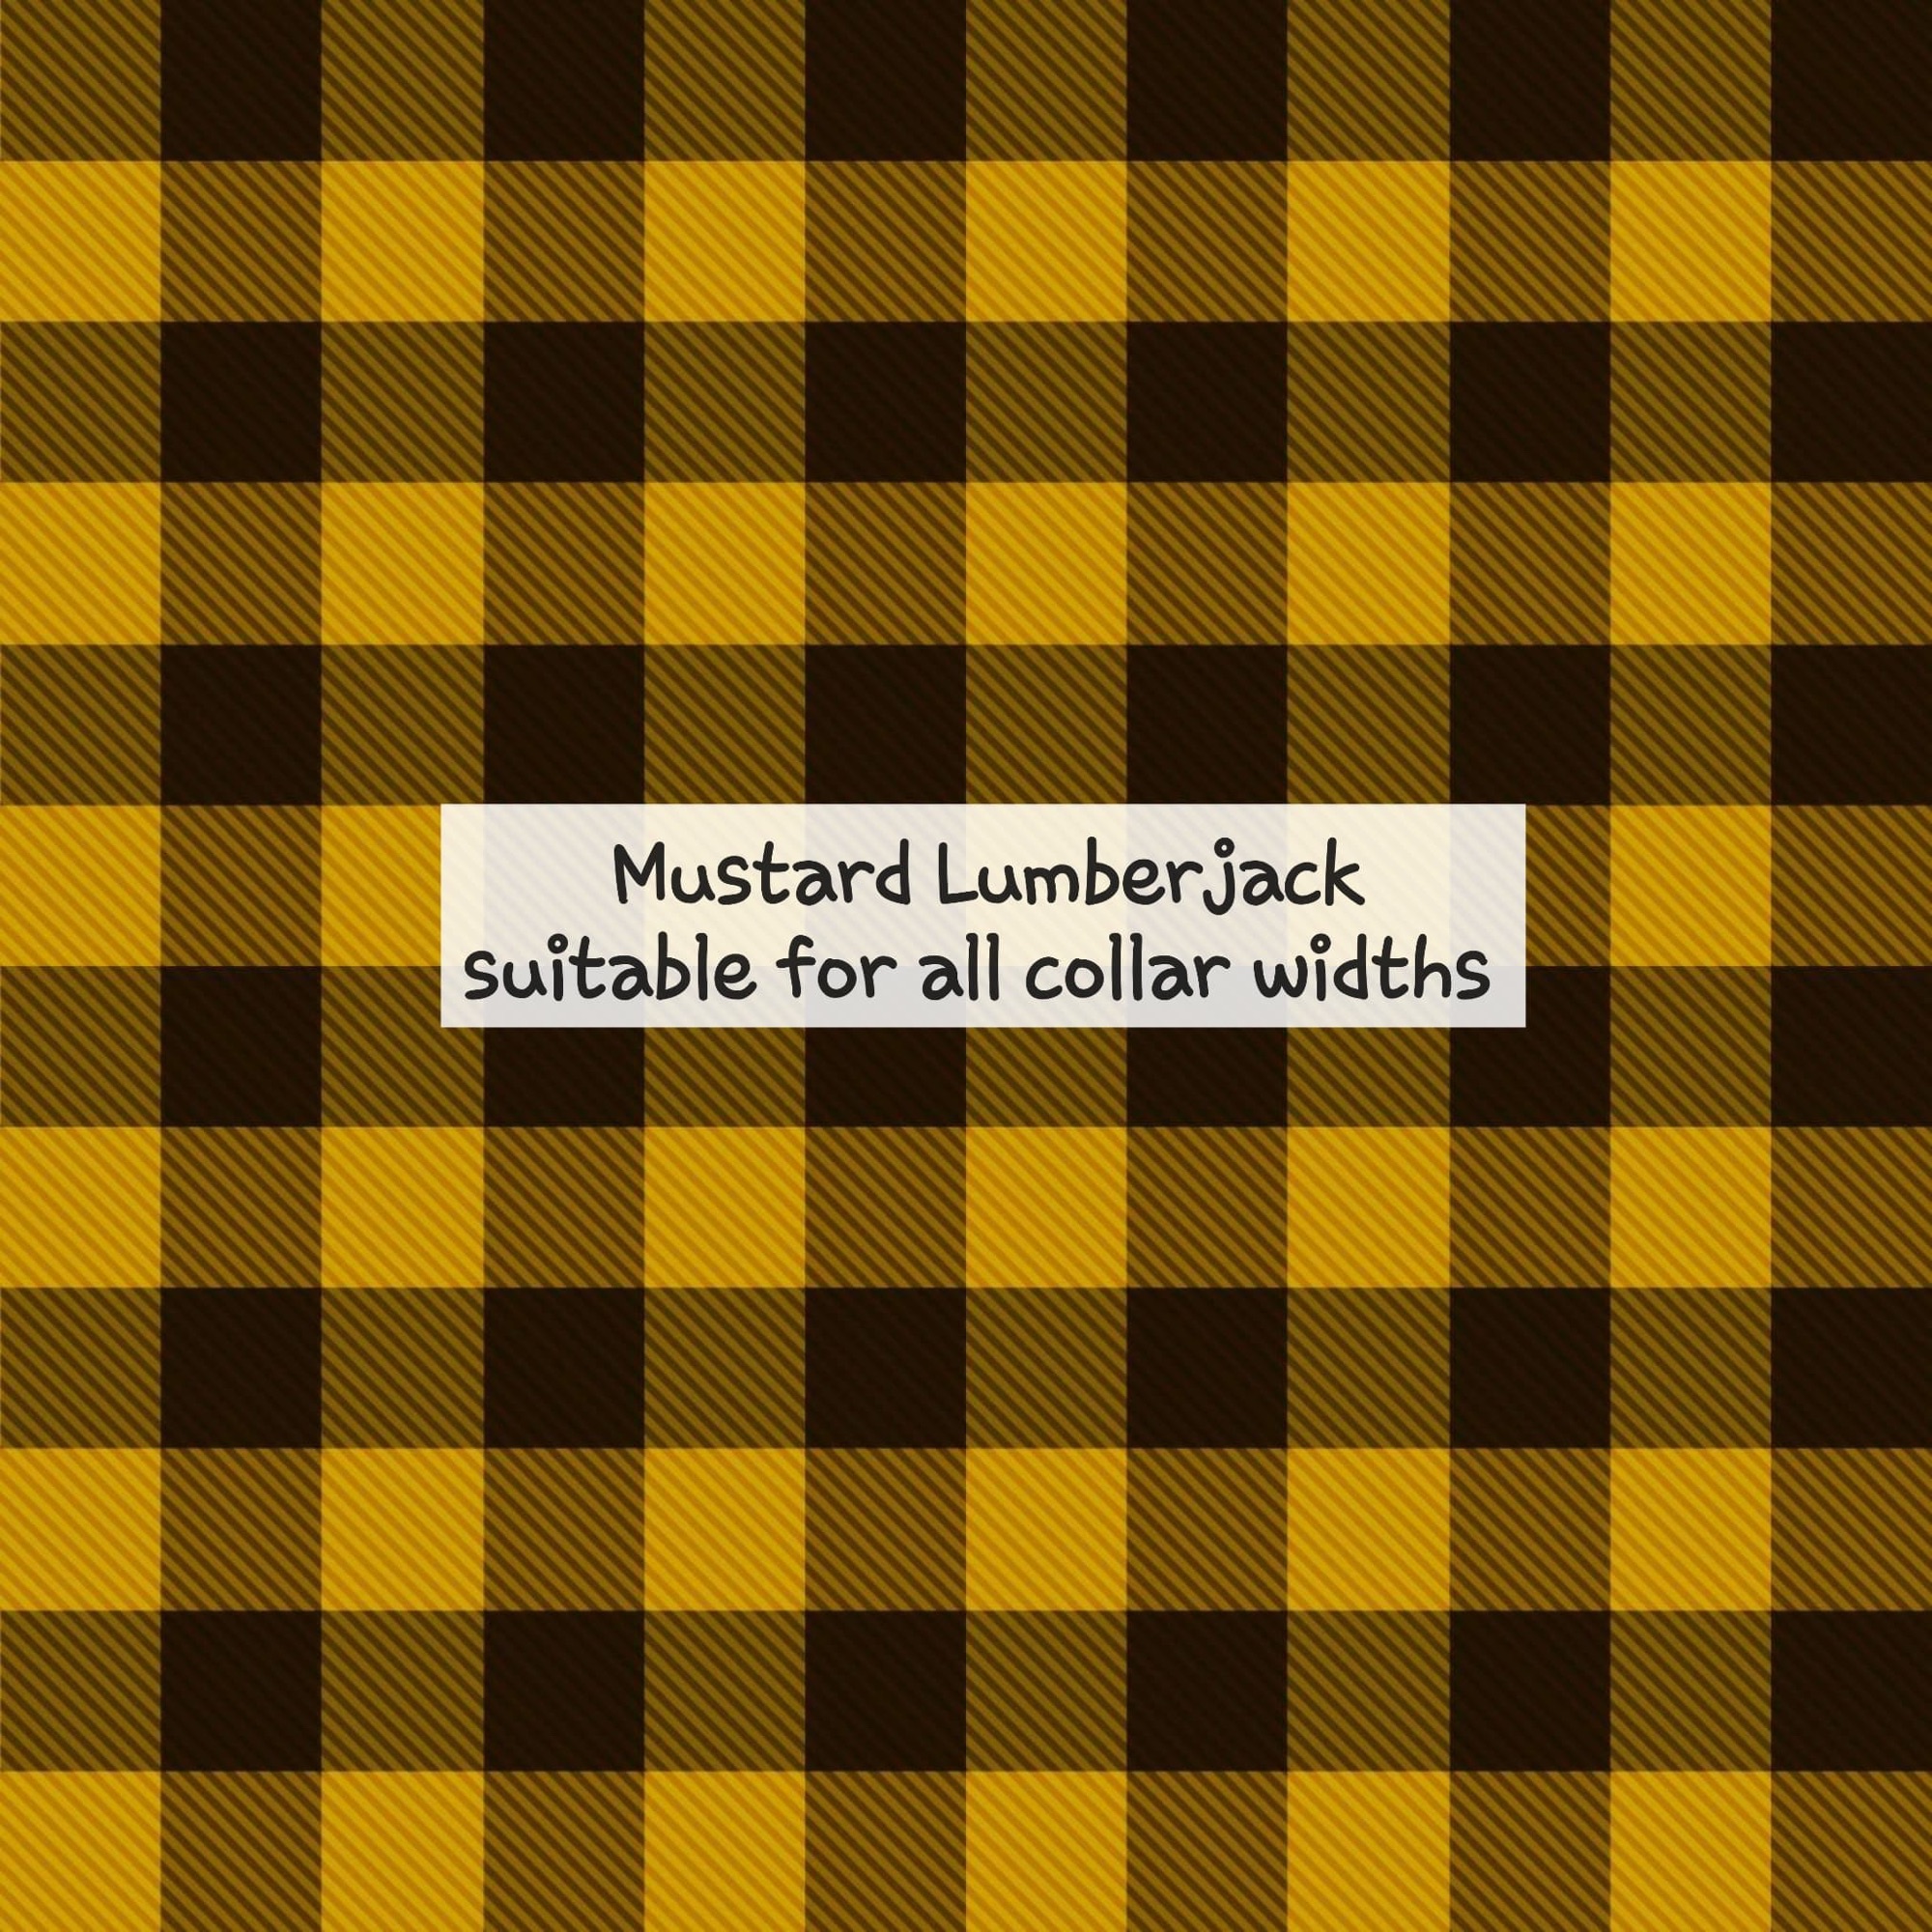 Mustard Lumberjack